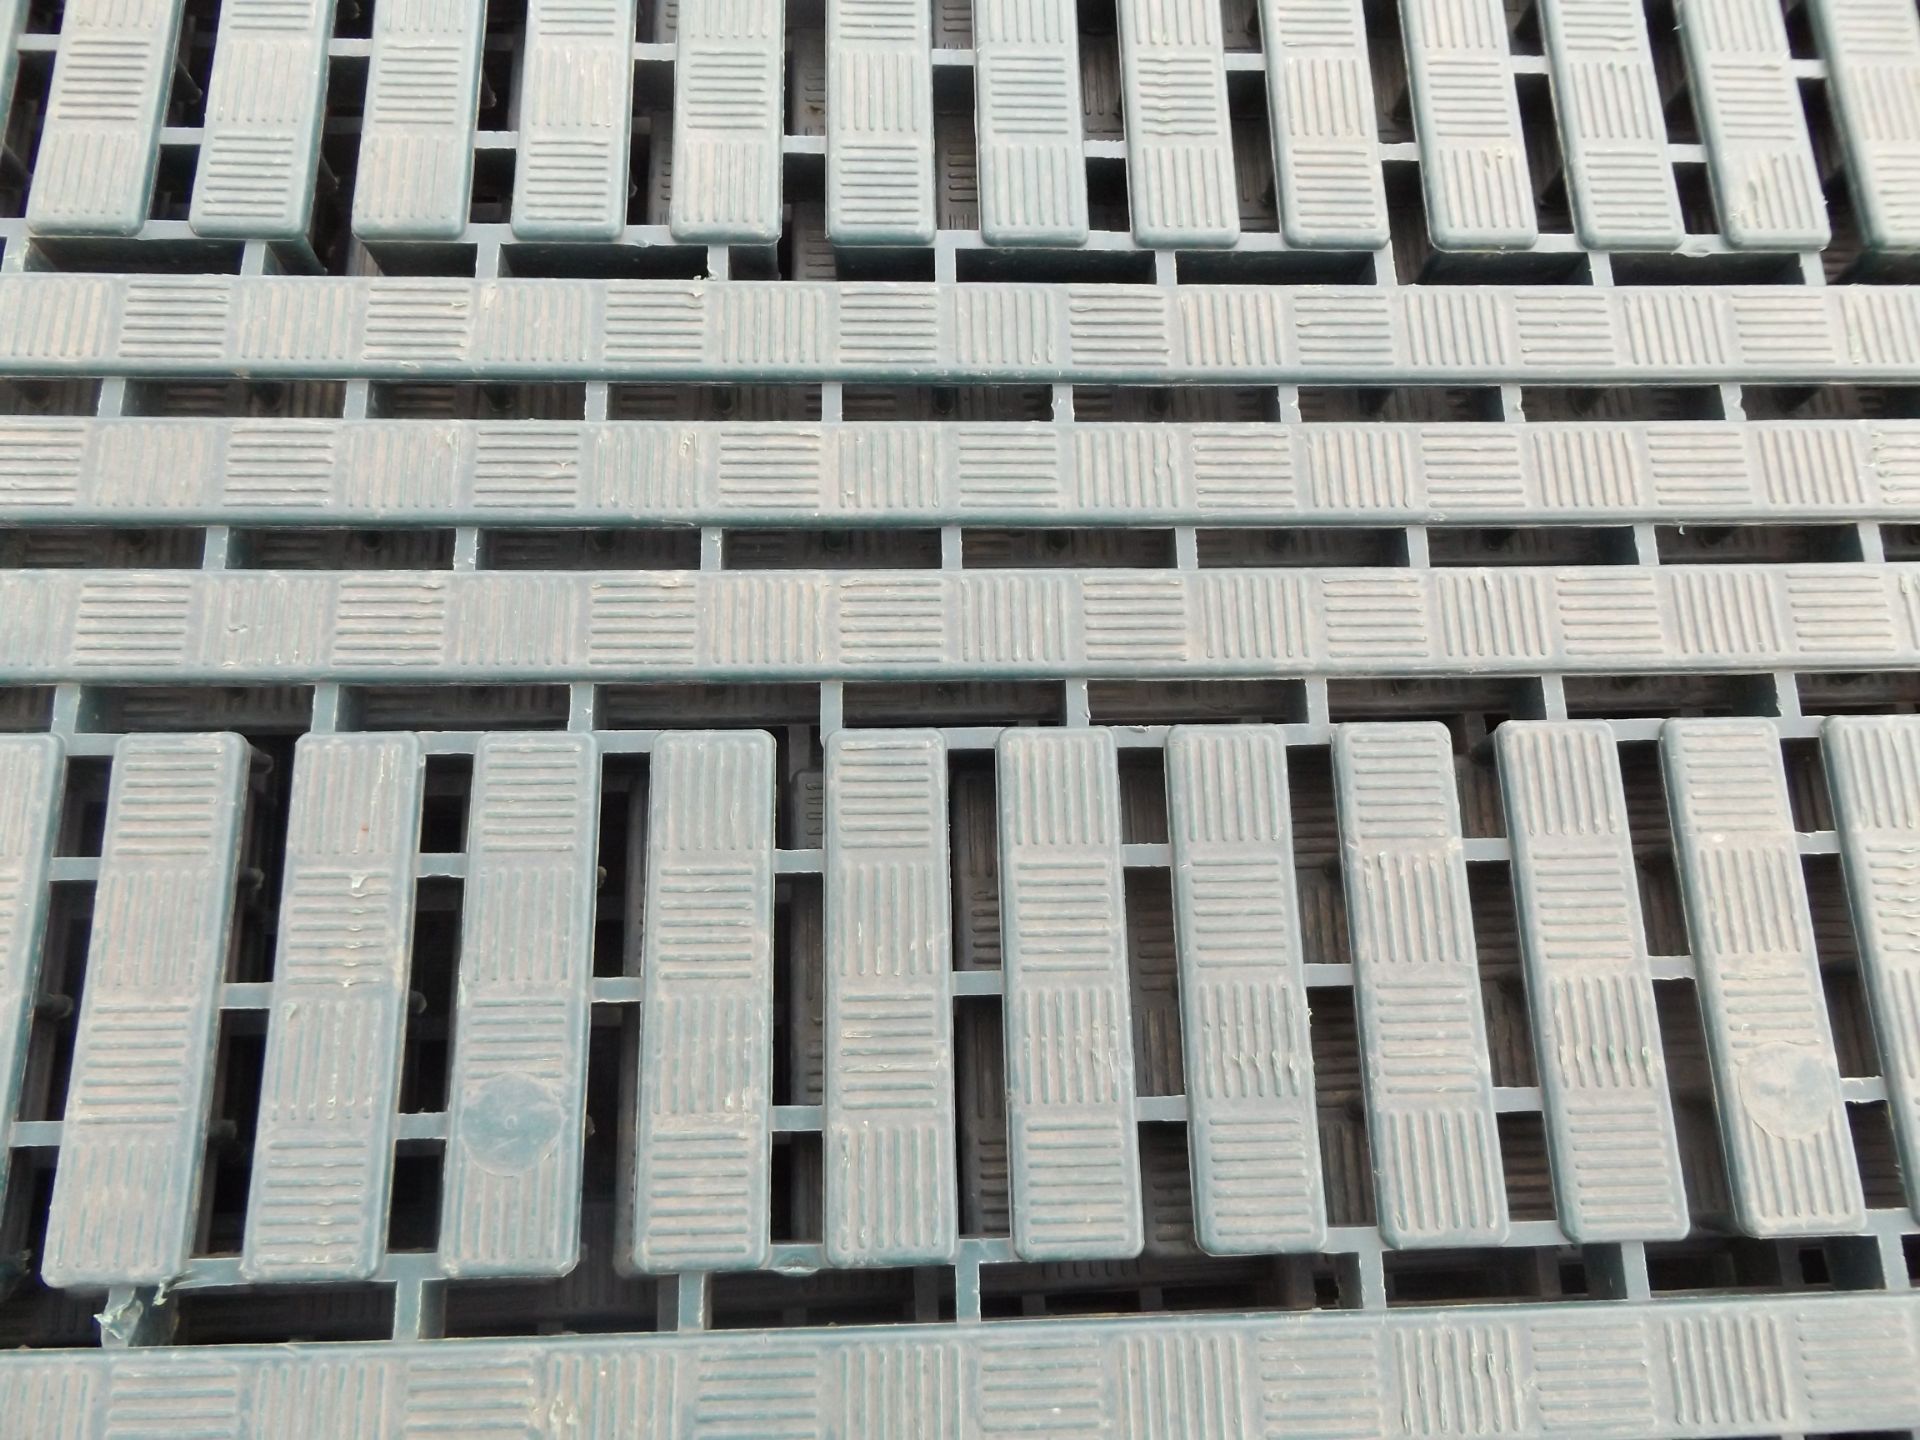 12.96 Square metres Perstorp Form Interlocking Flooring - Image 3 of 5